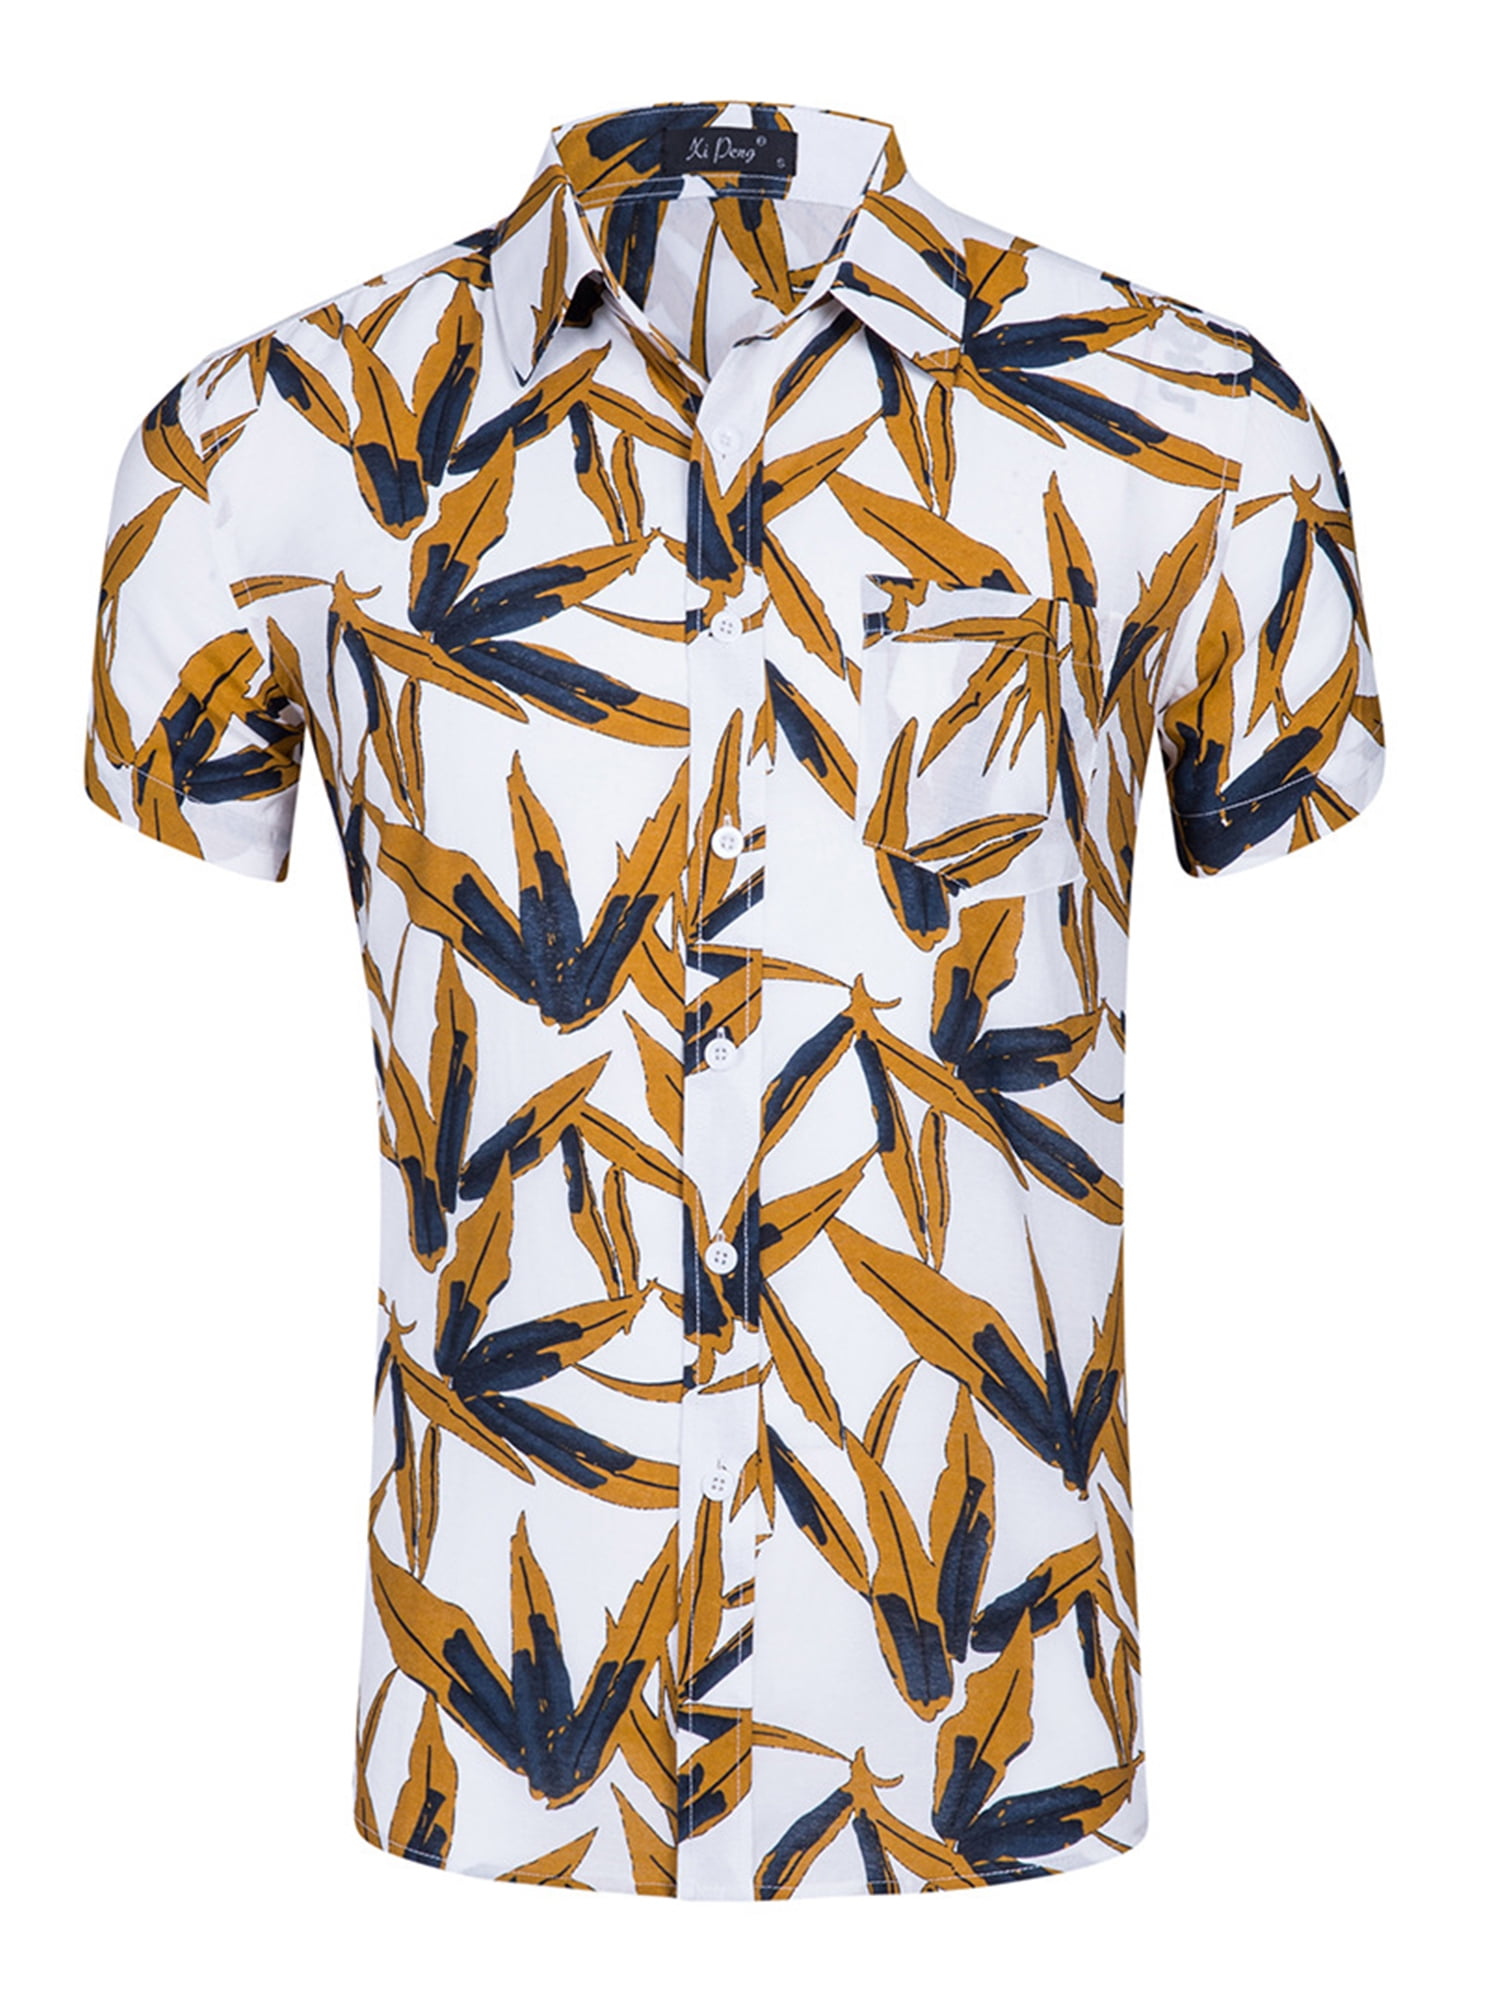 Mens Hipster Summer Short Sleeve Beach Hawaiian Shirt 2018 New Cotton Casual Floral Shirts Slim Fit 